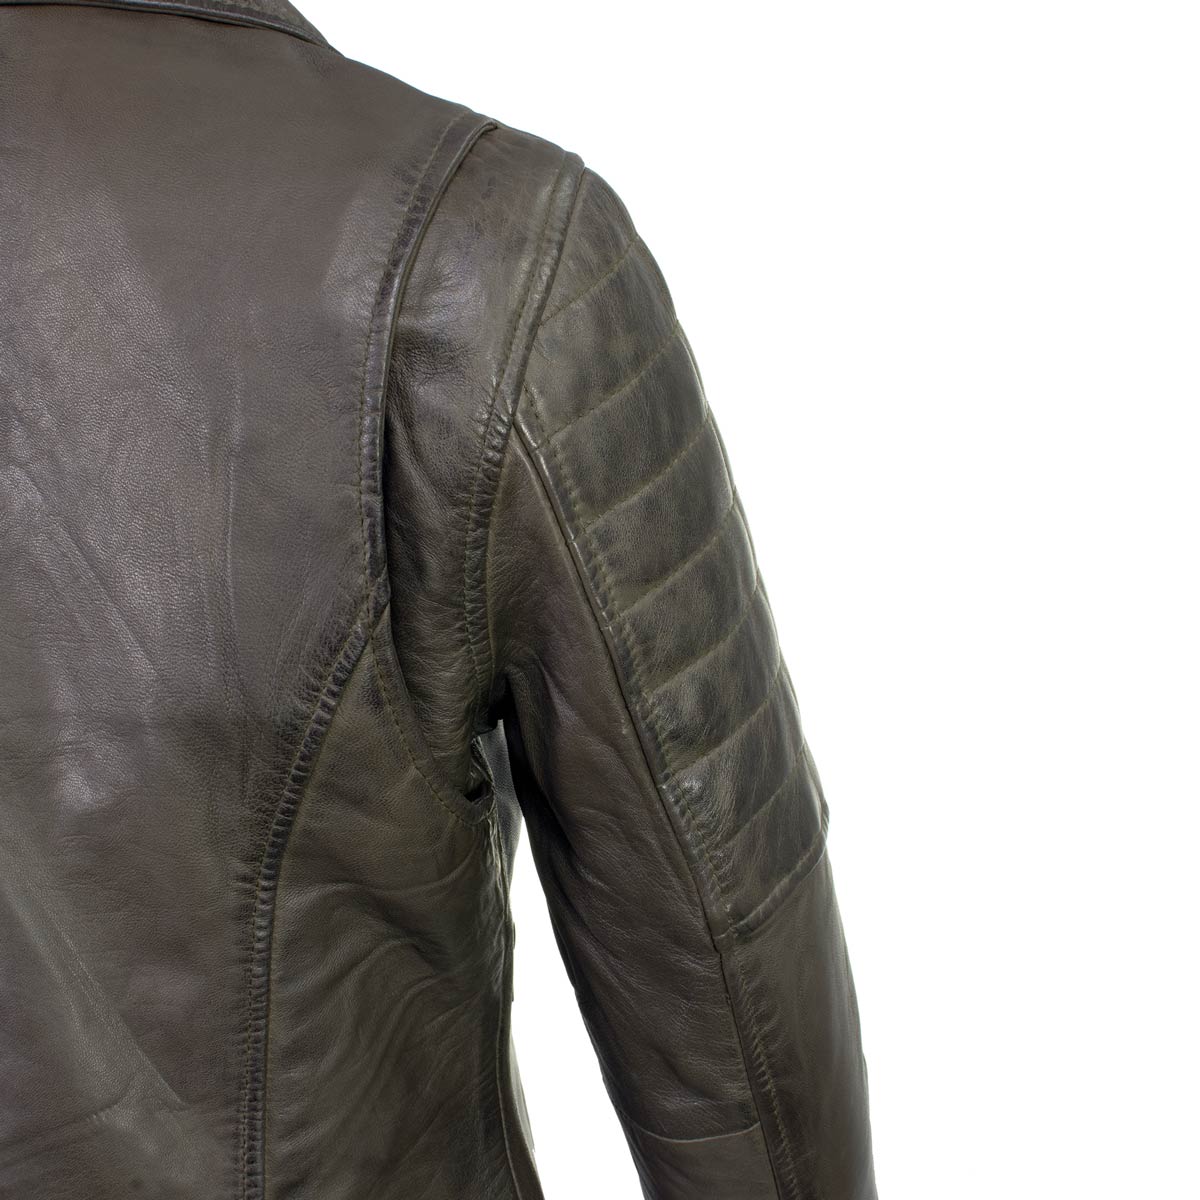 Milwaukee Leather SFL2870 Women's ‘Duchess’ Olive Motorcycle Style Fashion Casual Leather Jacket